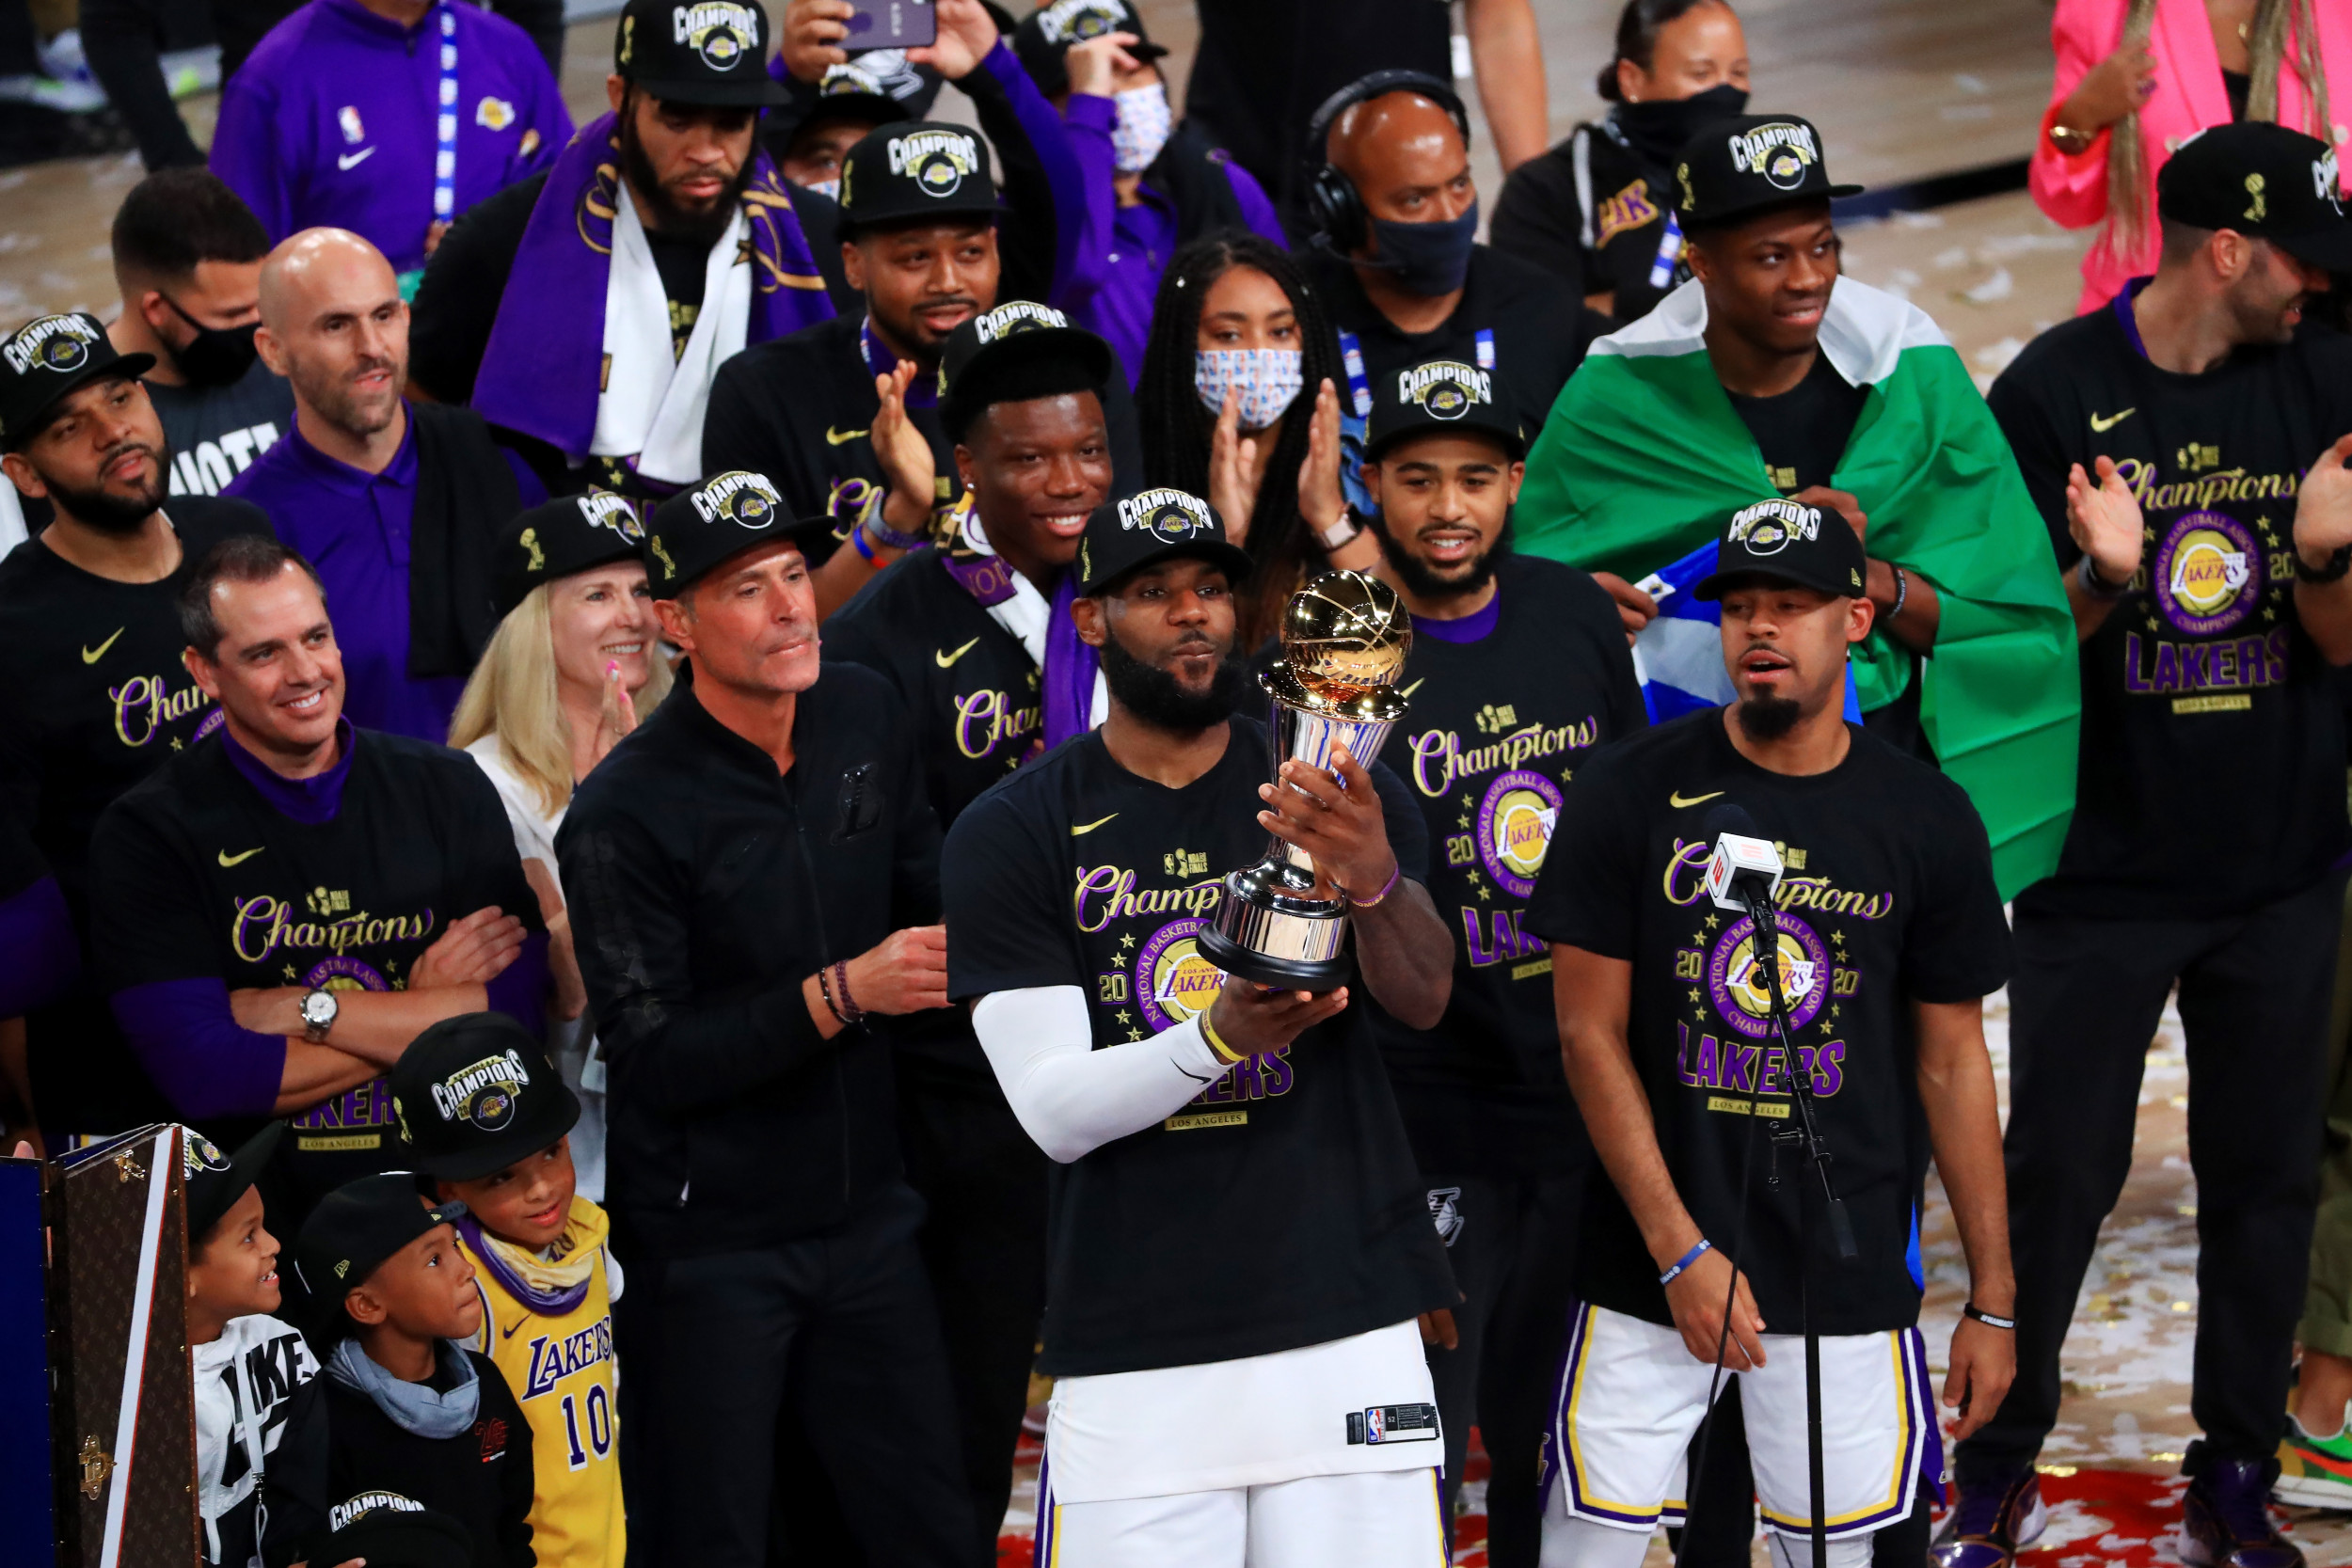 Lakers Win 2020 NBA Championship, LeBron James Named Finals MVP